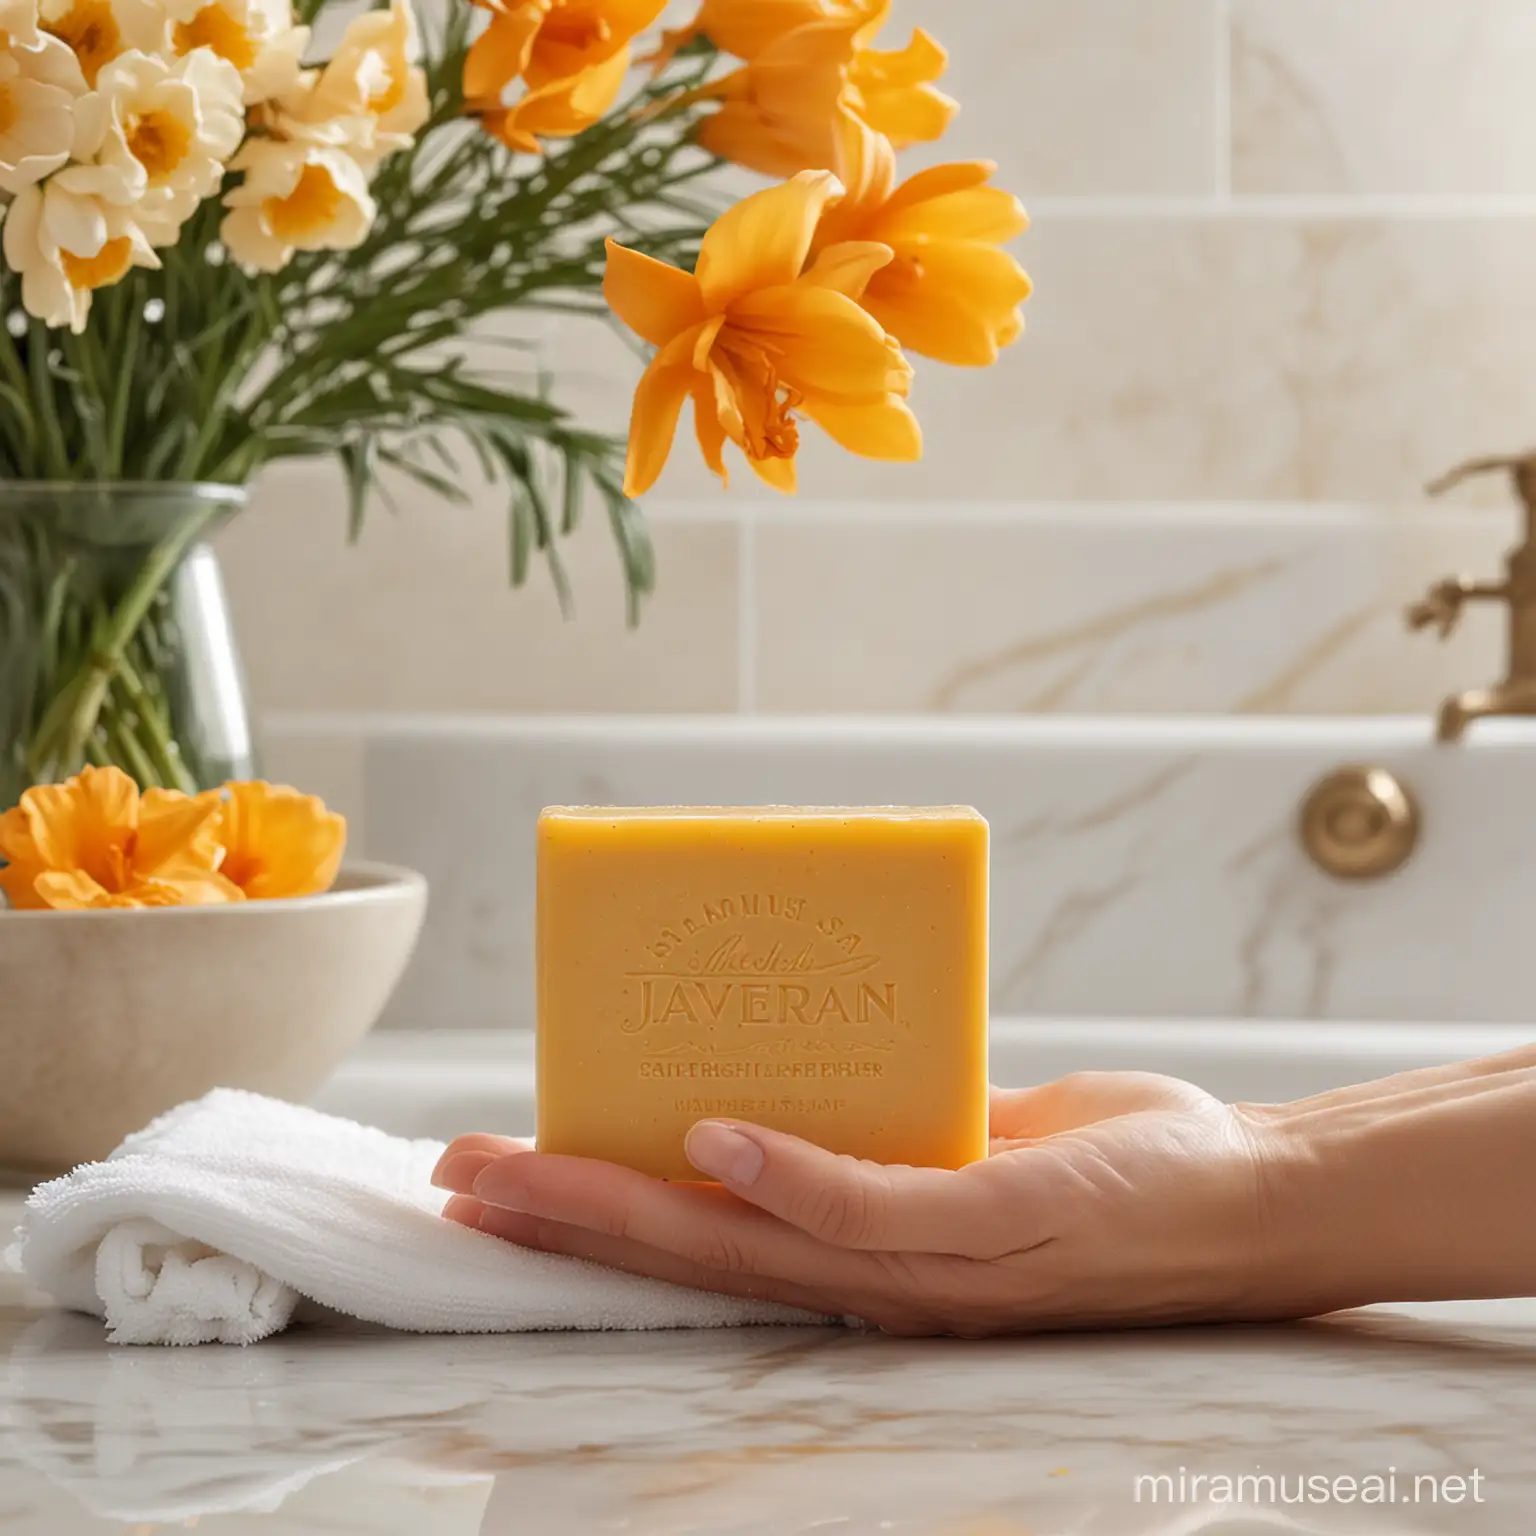 Luxurious Saffron Soap Hand in Elegant Bathroom